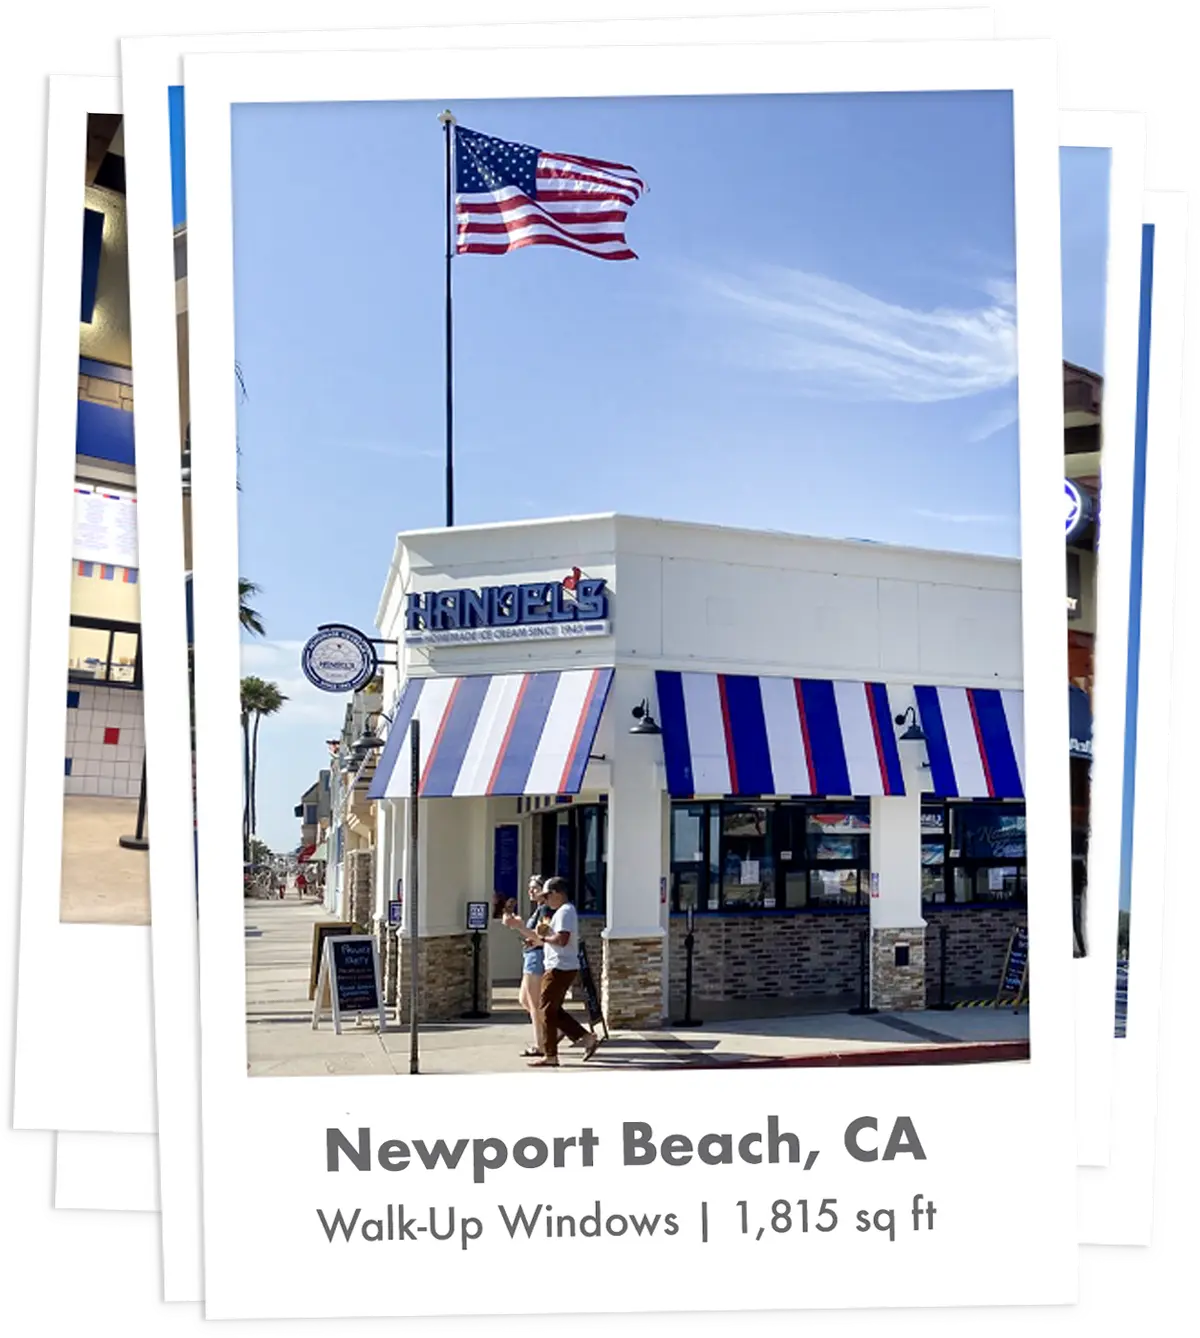 Handel's Ice Cream store in Newport Beach, California